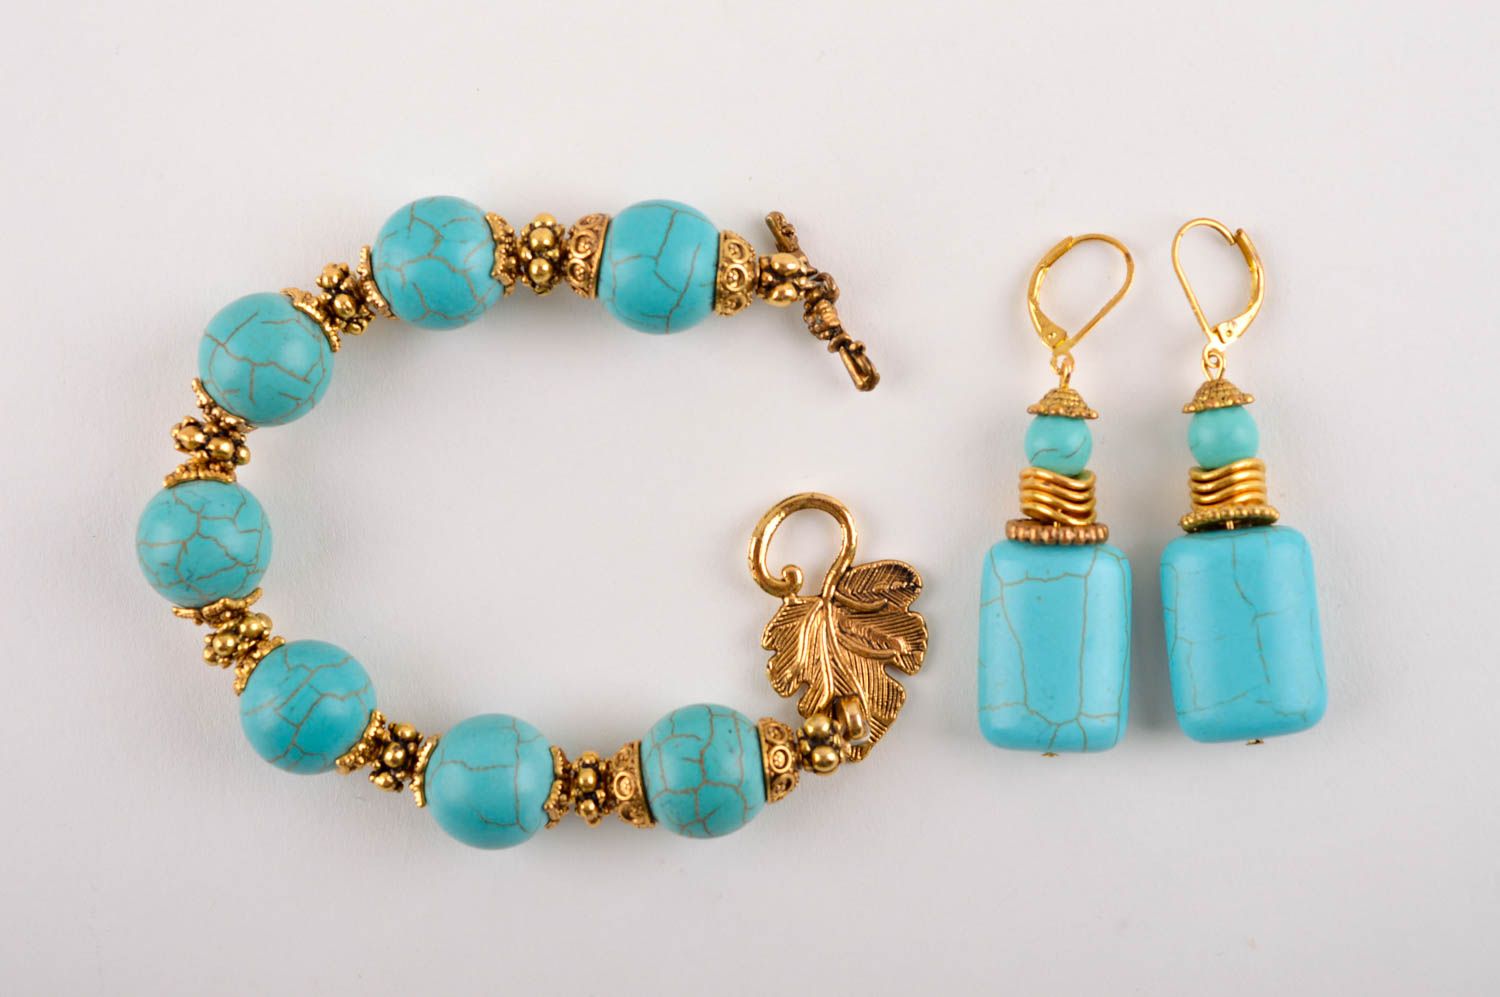 Handmade gemstone jewelry set wrist bracelet turquoise dangling earrings photo 2